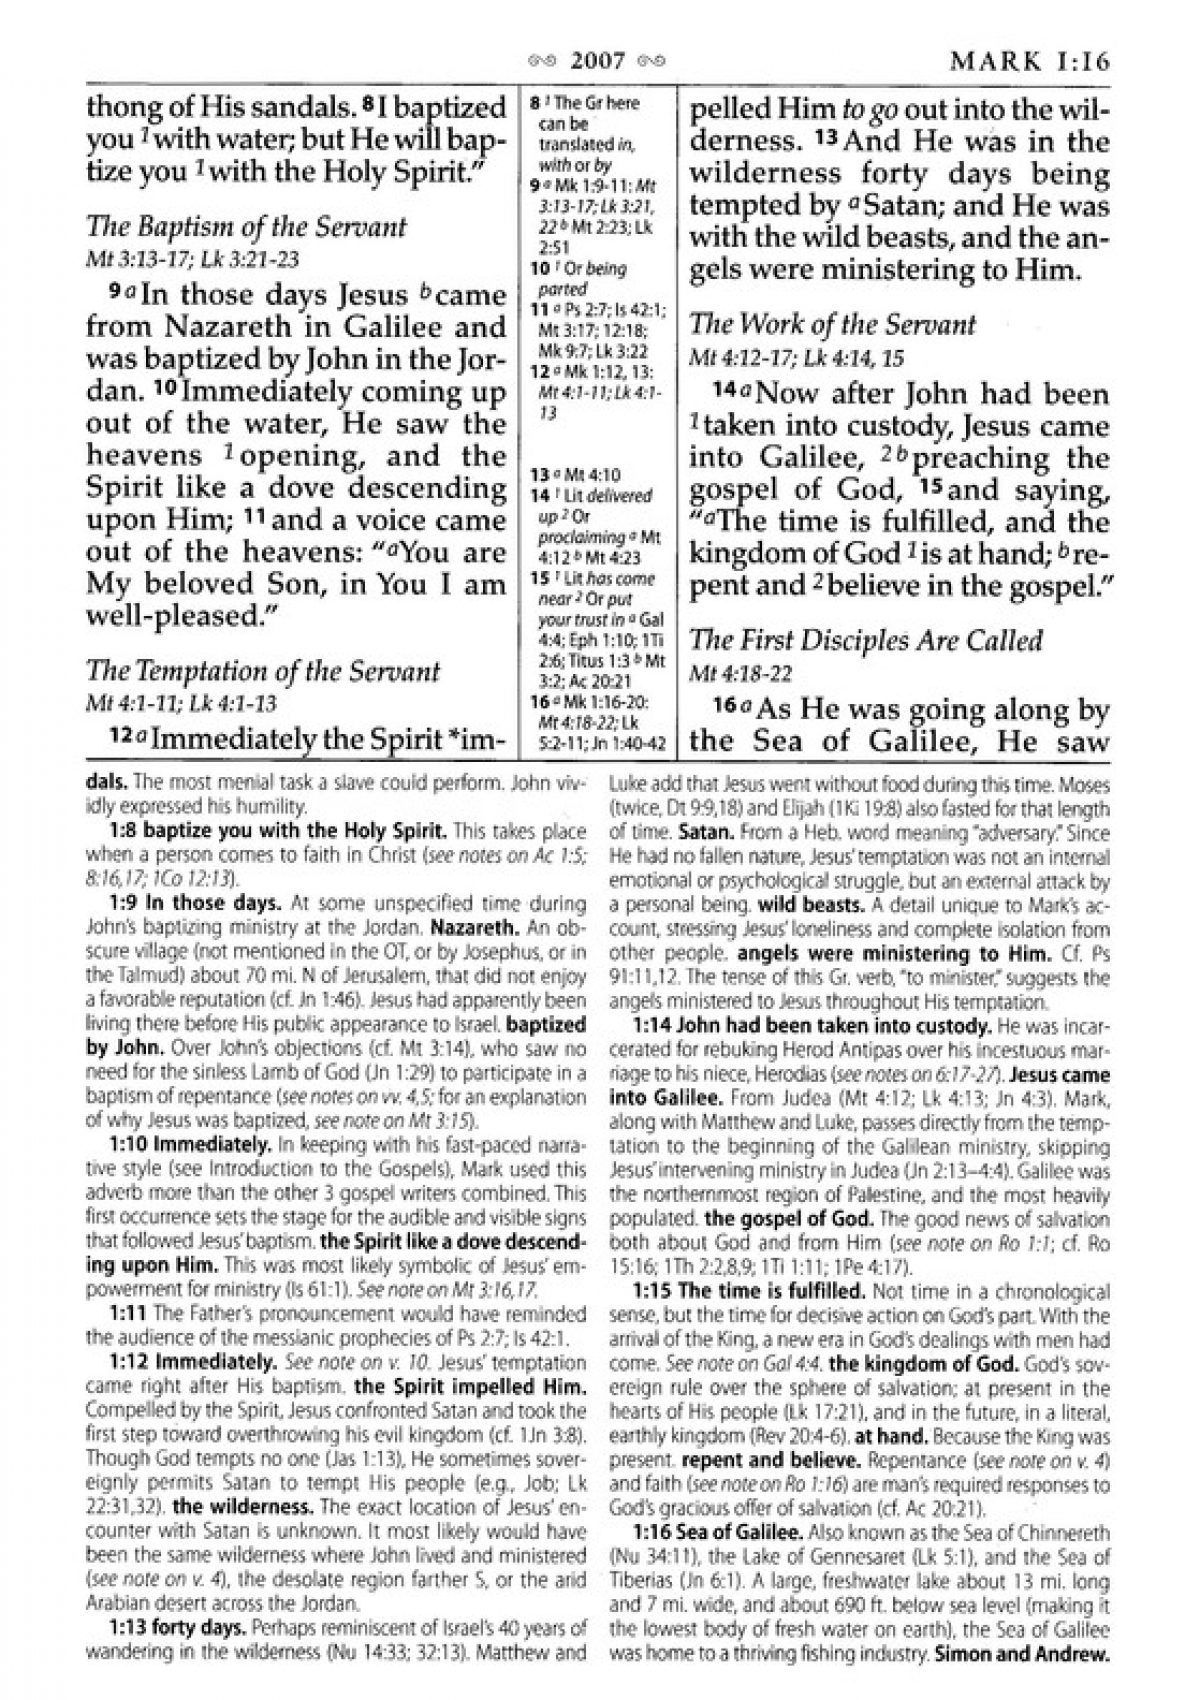 nasb macarthur study bible large print black bonded thumb indexed 6